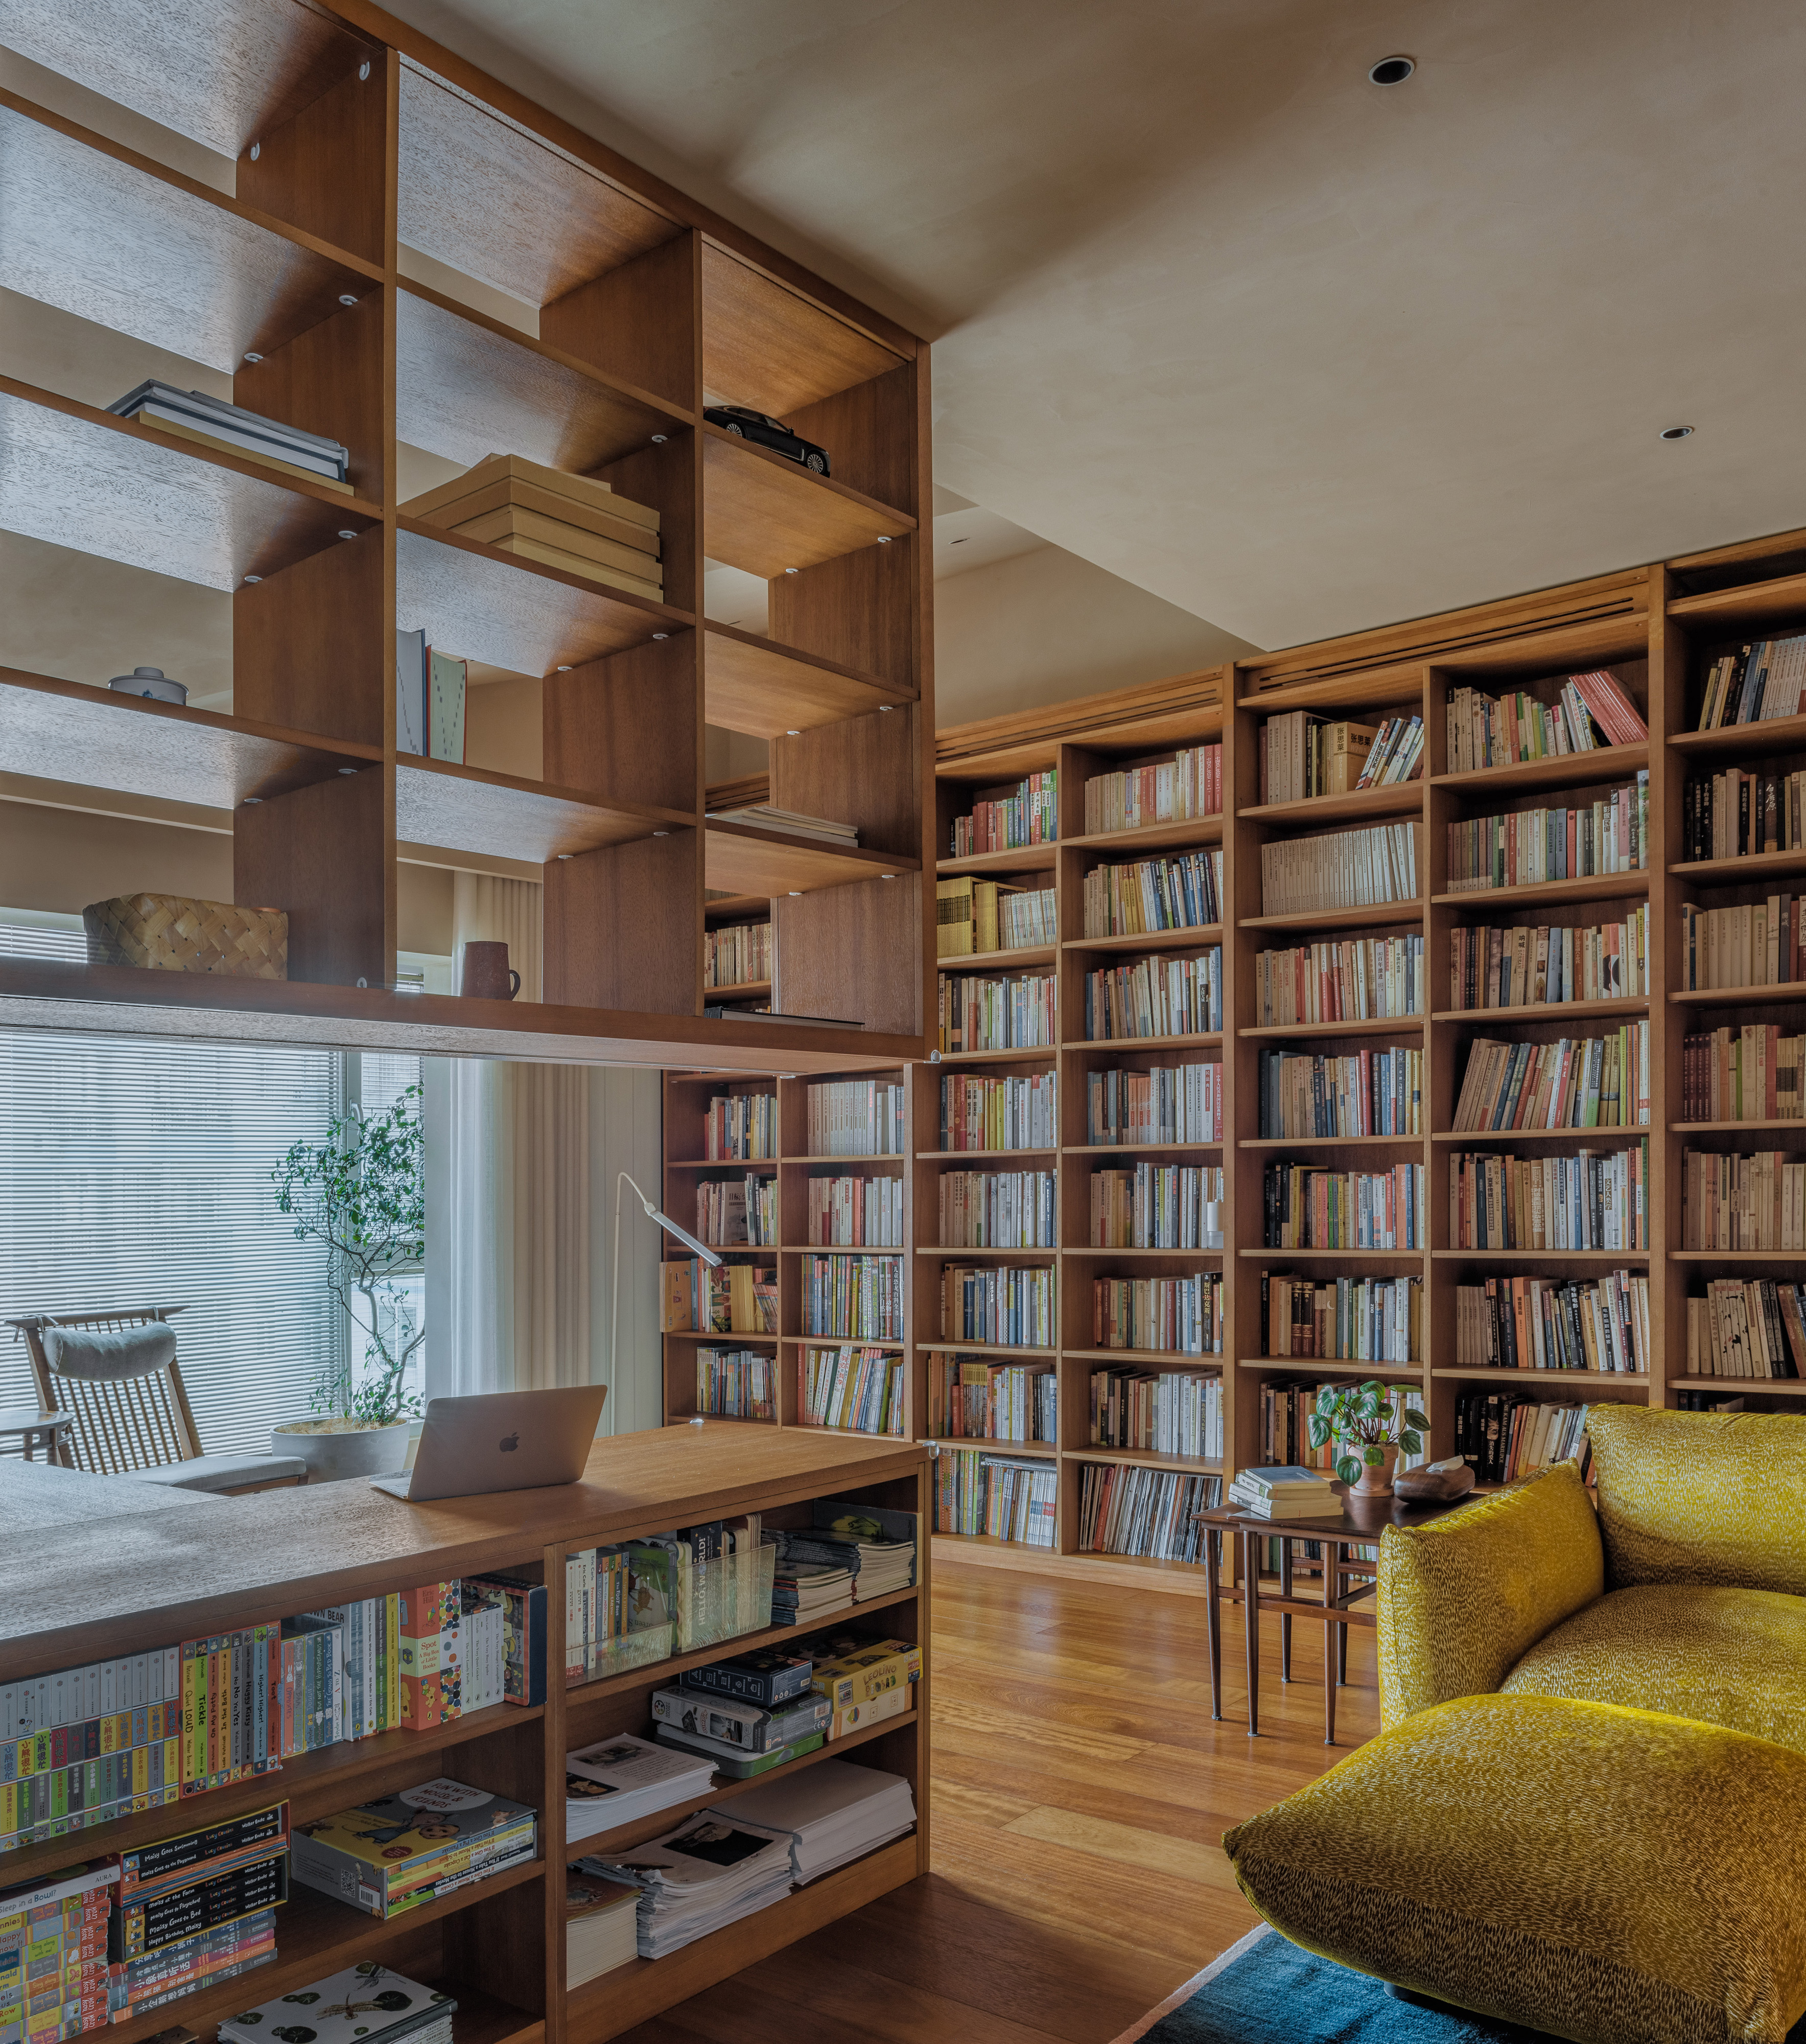 A book collection house